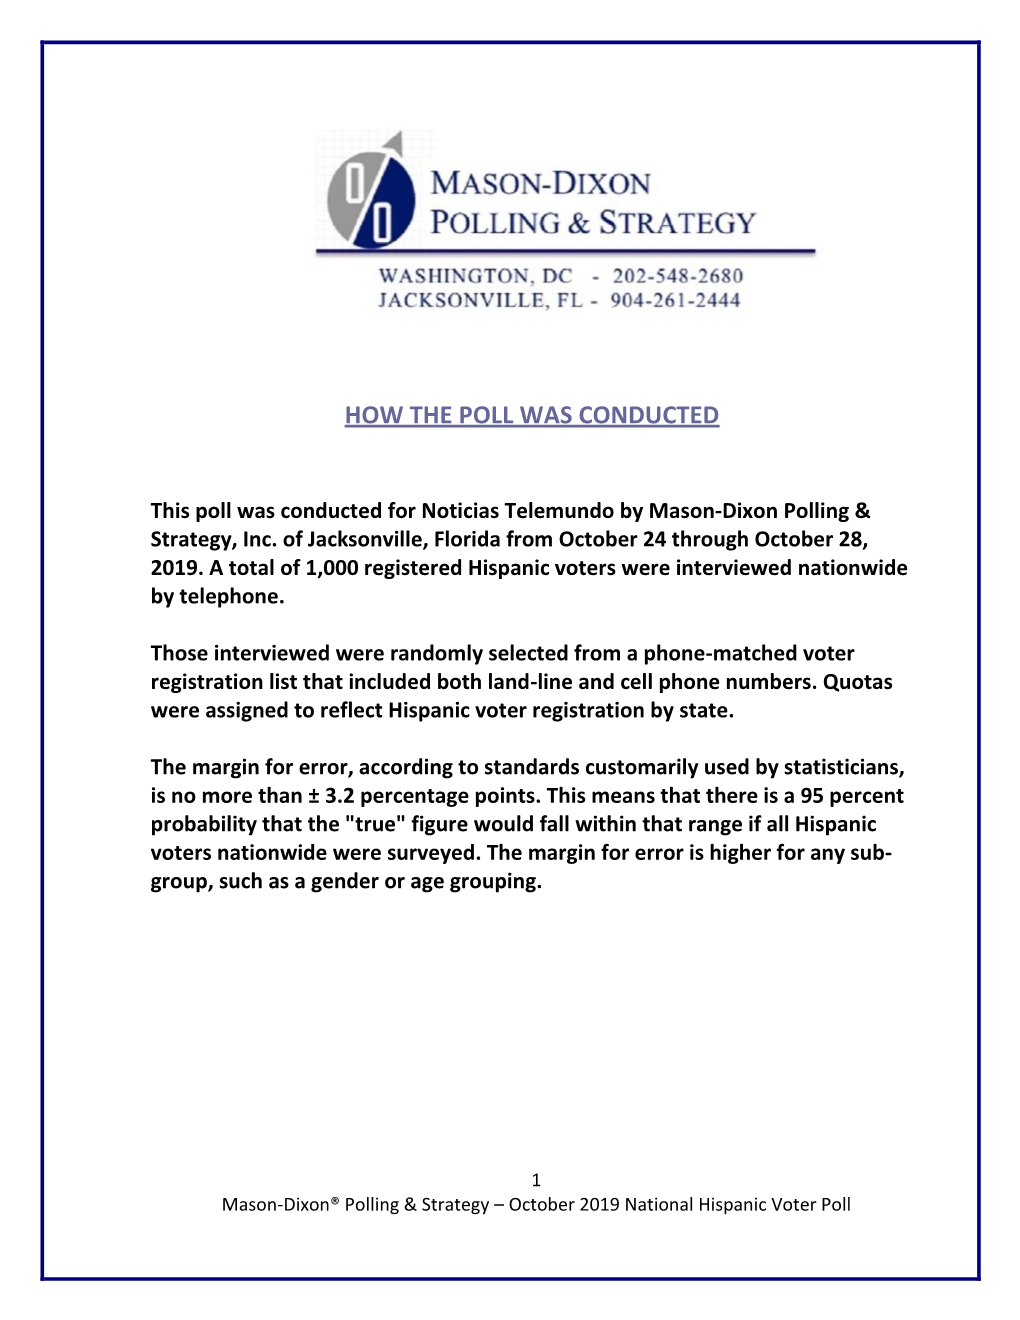 Telemundo Poll Conducted by Mason-Dixon Polling